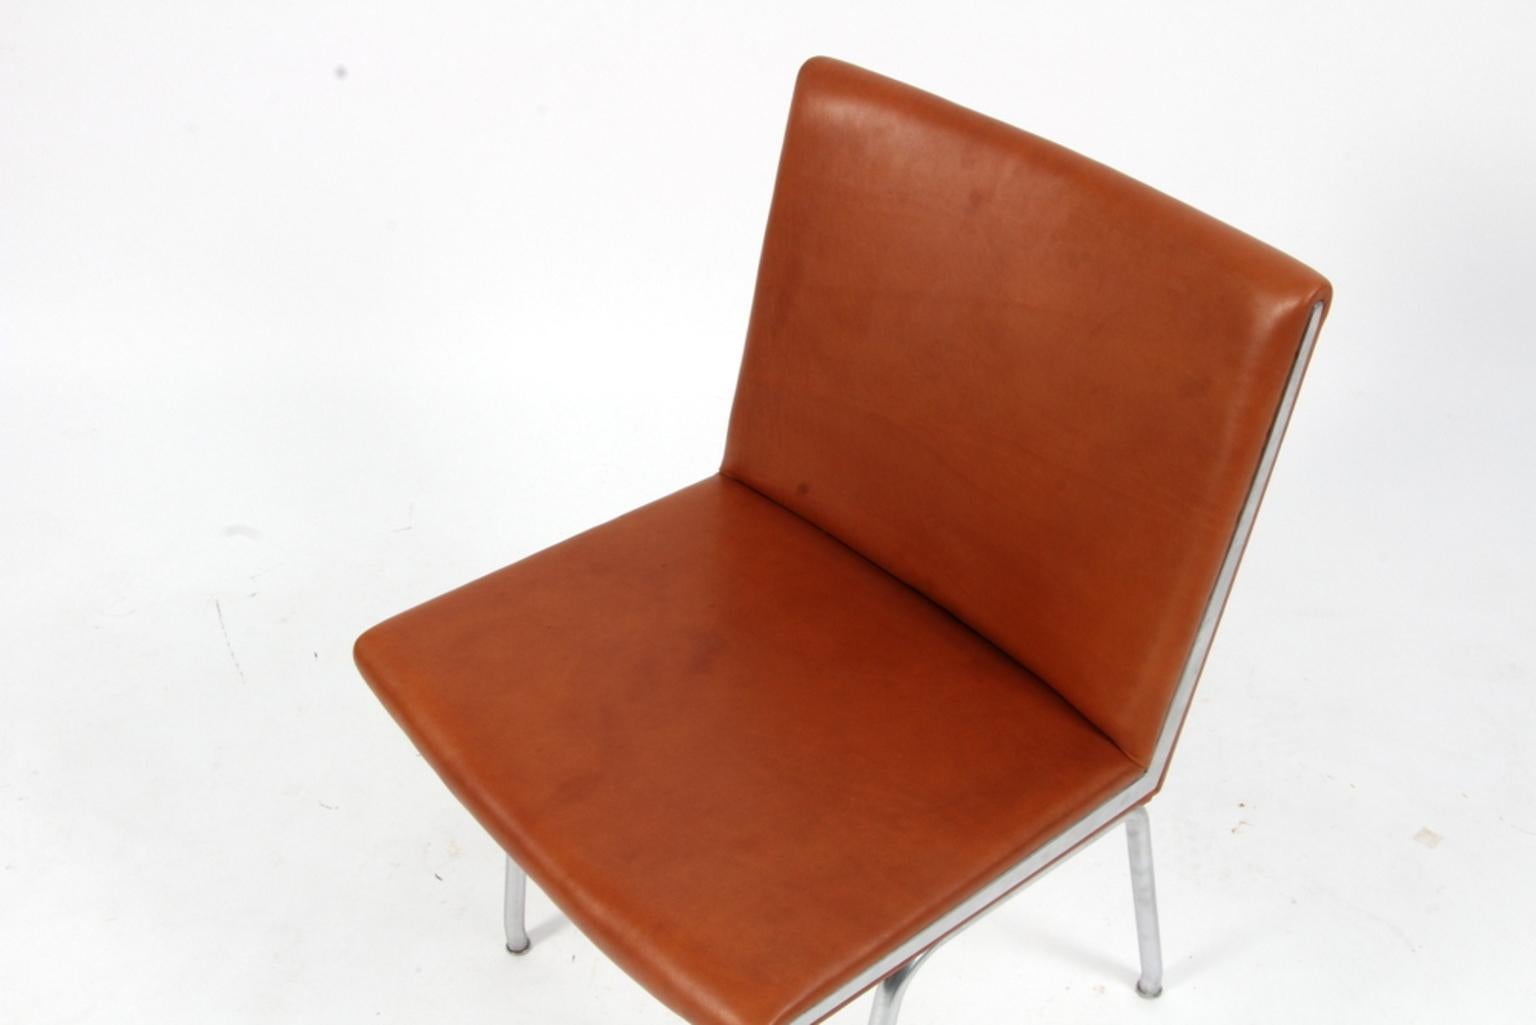 Hans J. Wegner lufthavnsttole designed for Kastrup Airport. New upholstered with Cognac aniline leather.

Base and sides in steel.

Model AP38, made by AP stolen.